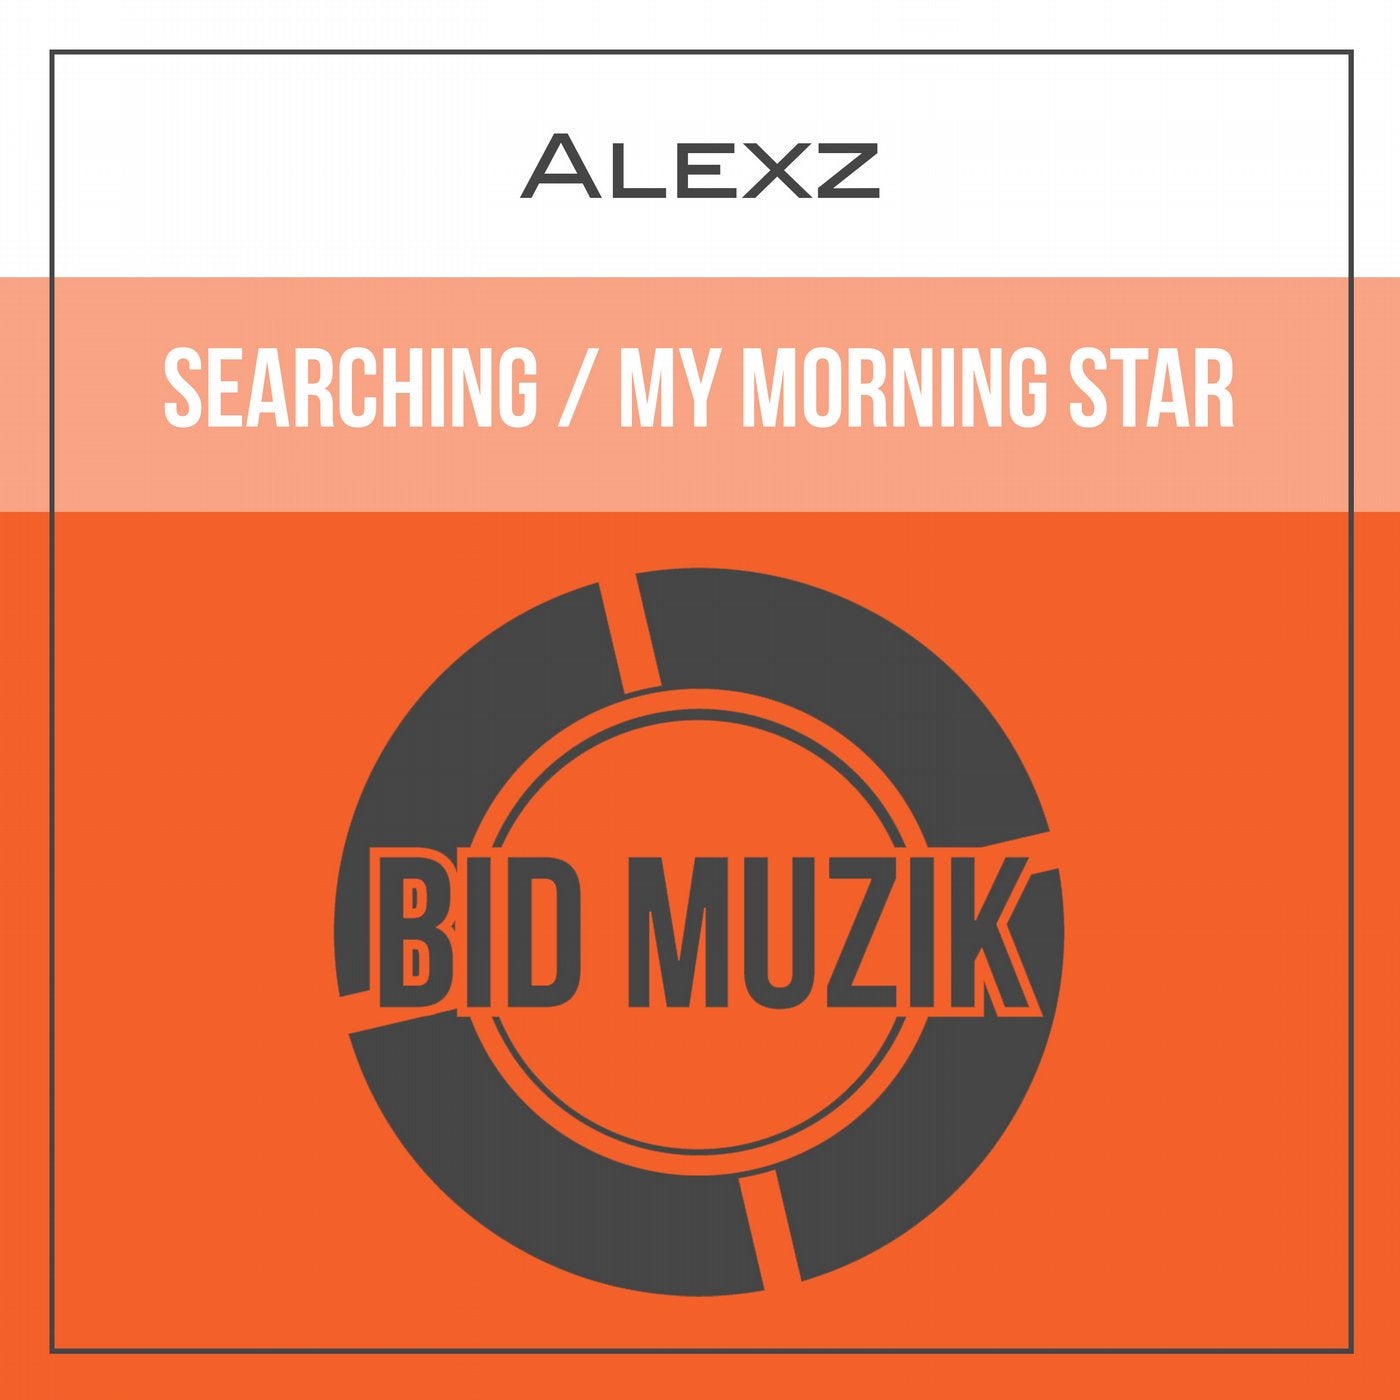 Searching / Morning Star